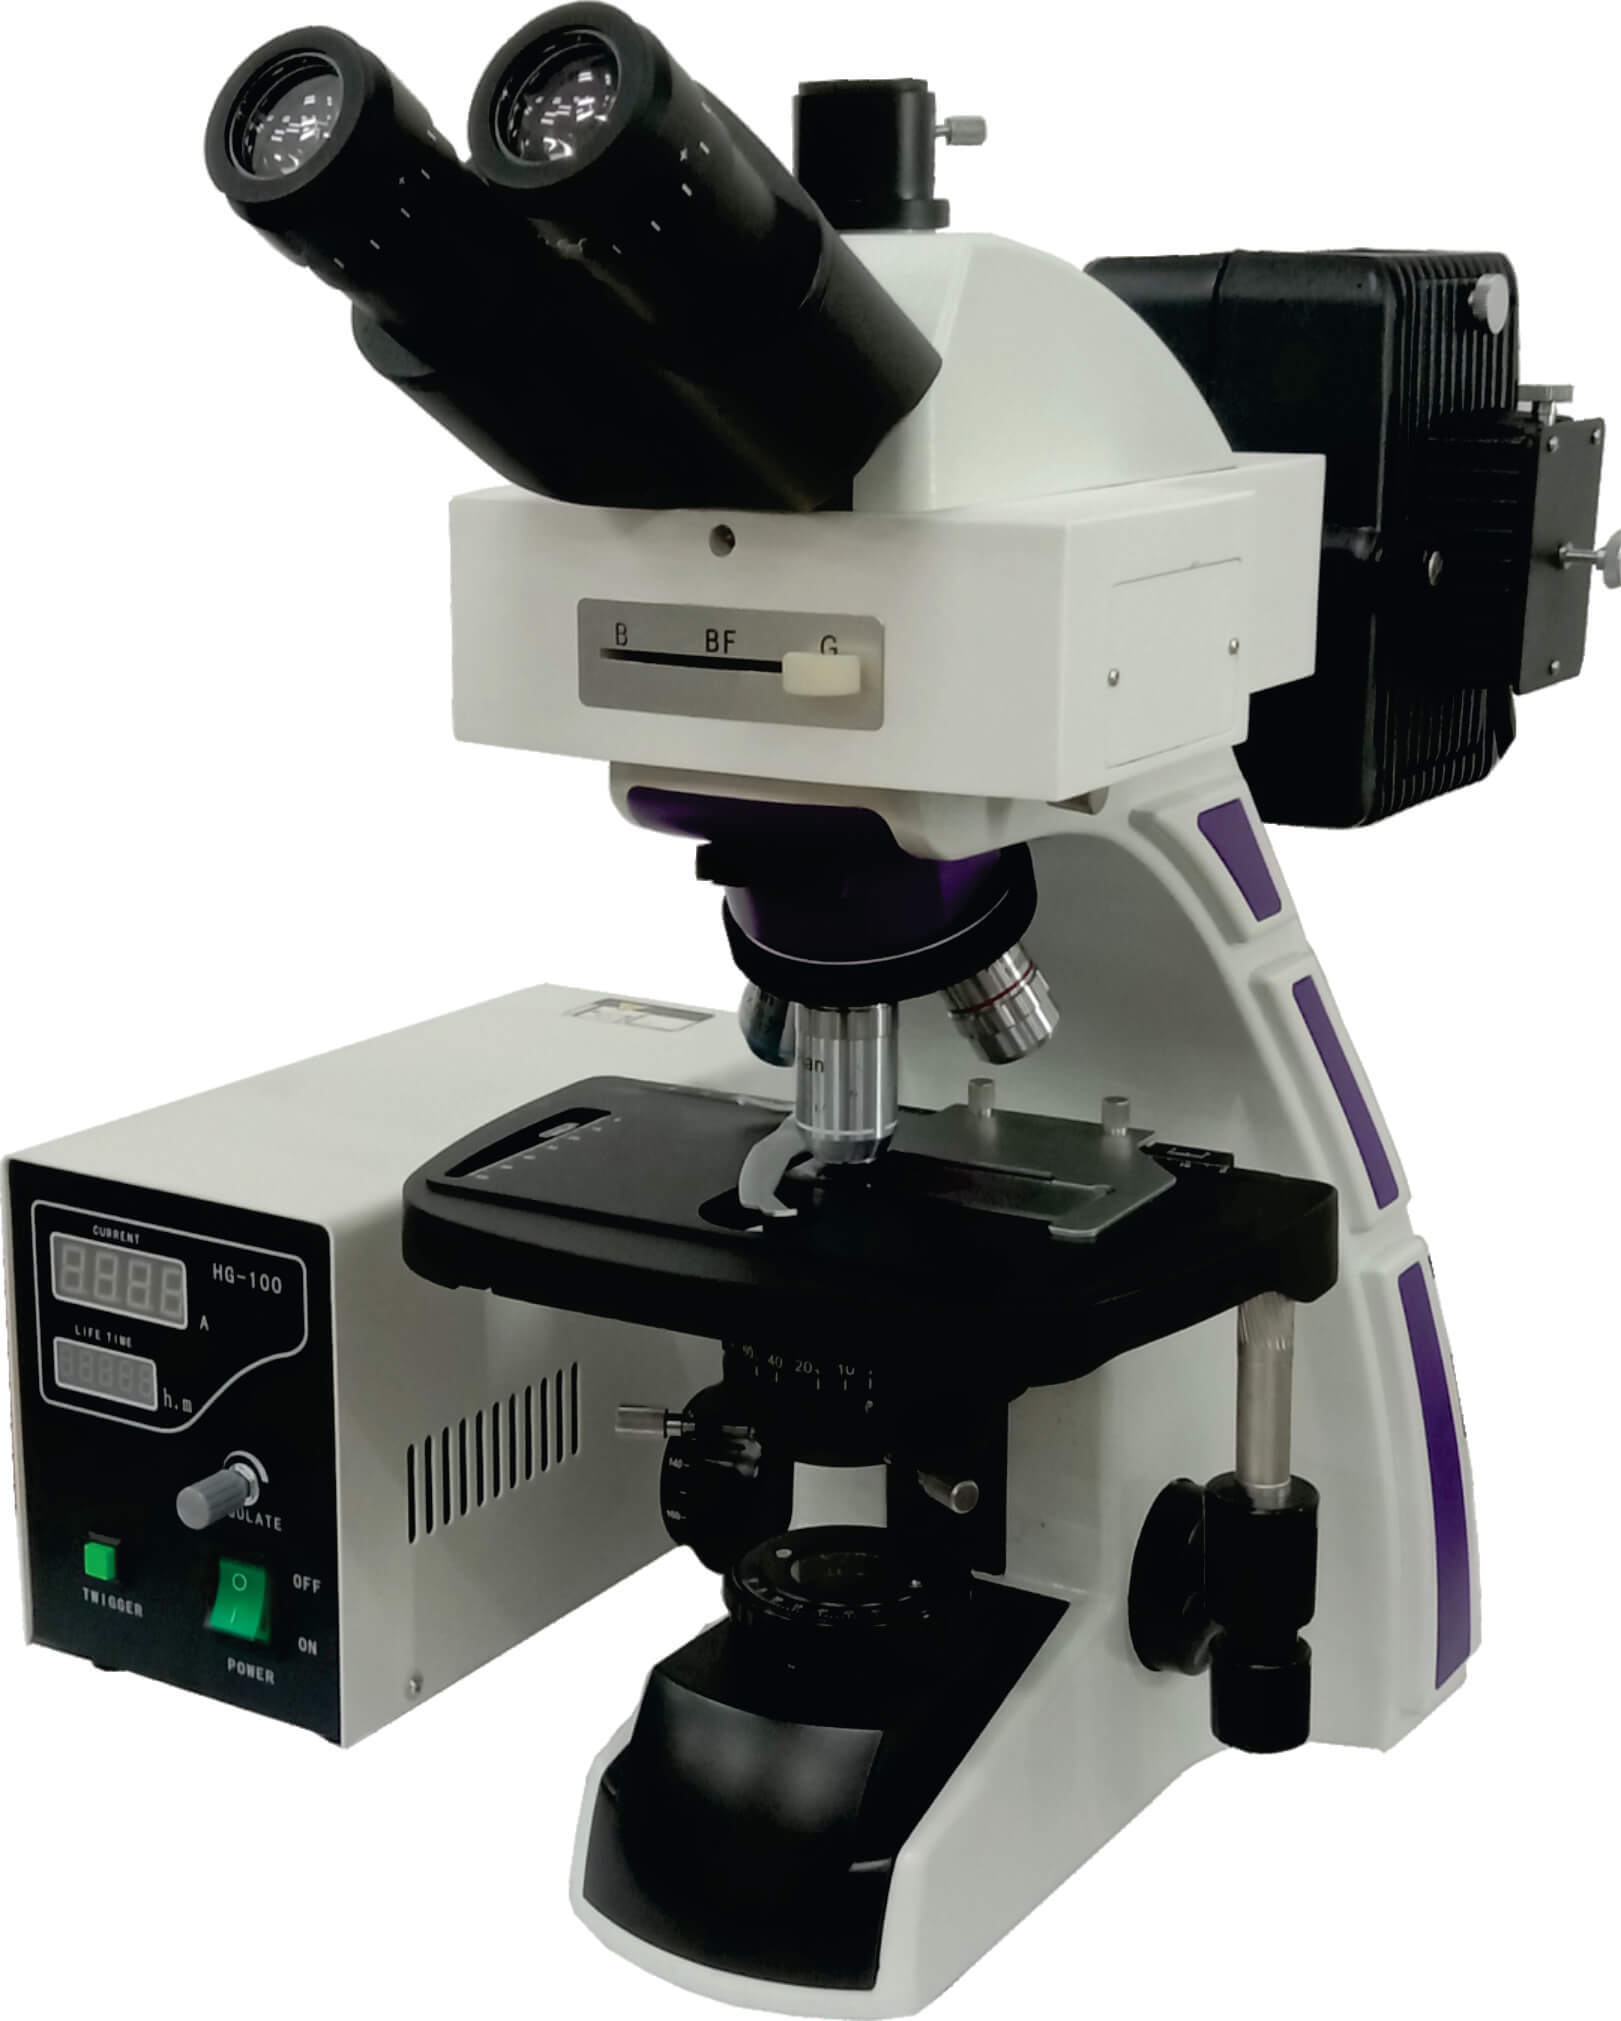 Epi-fluorescence Microscope